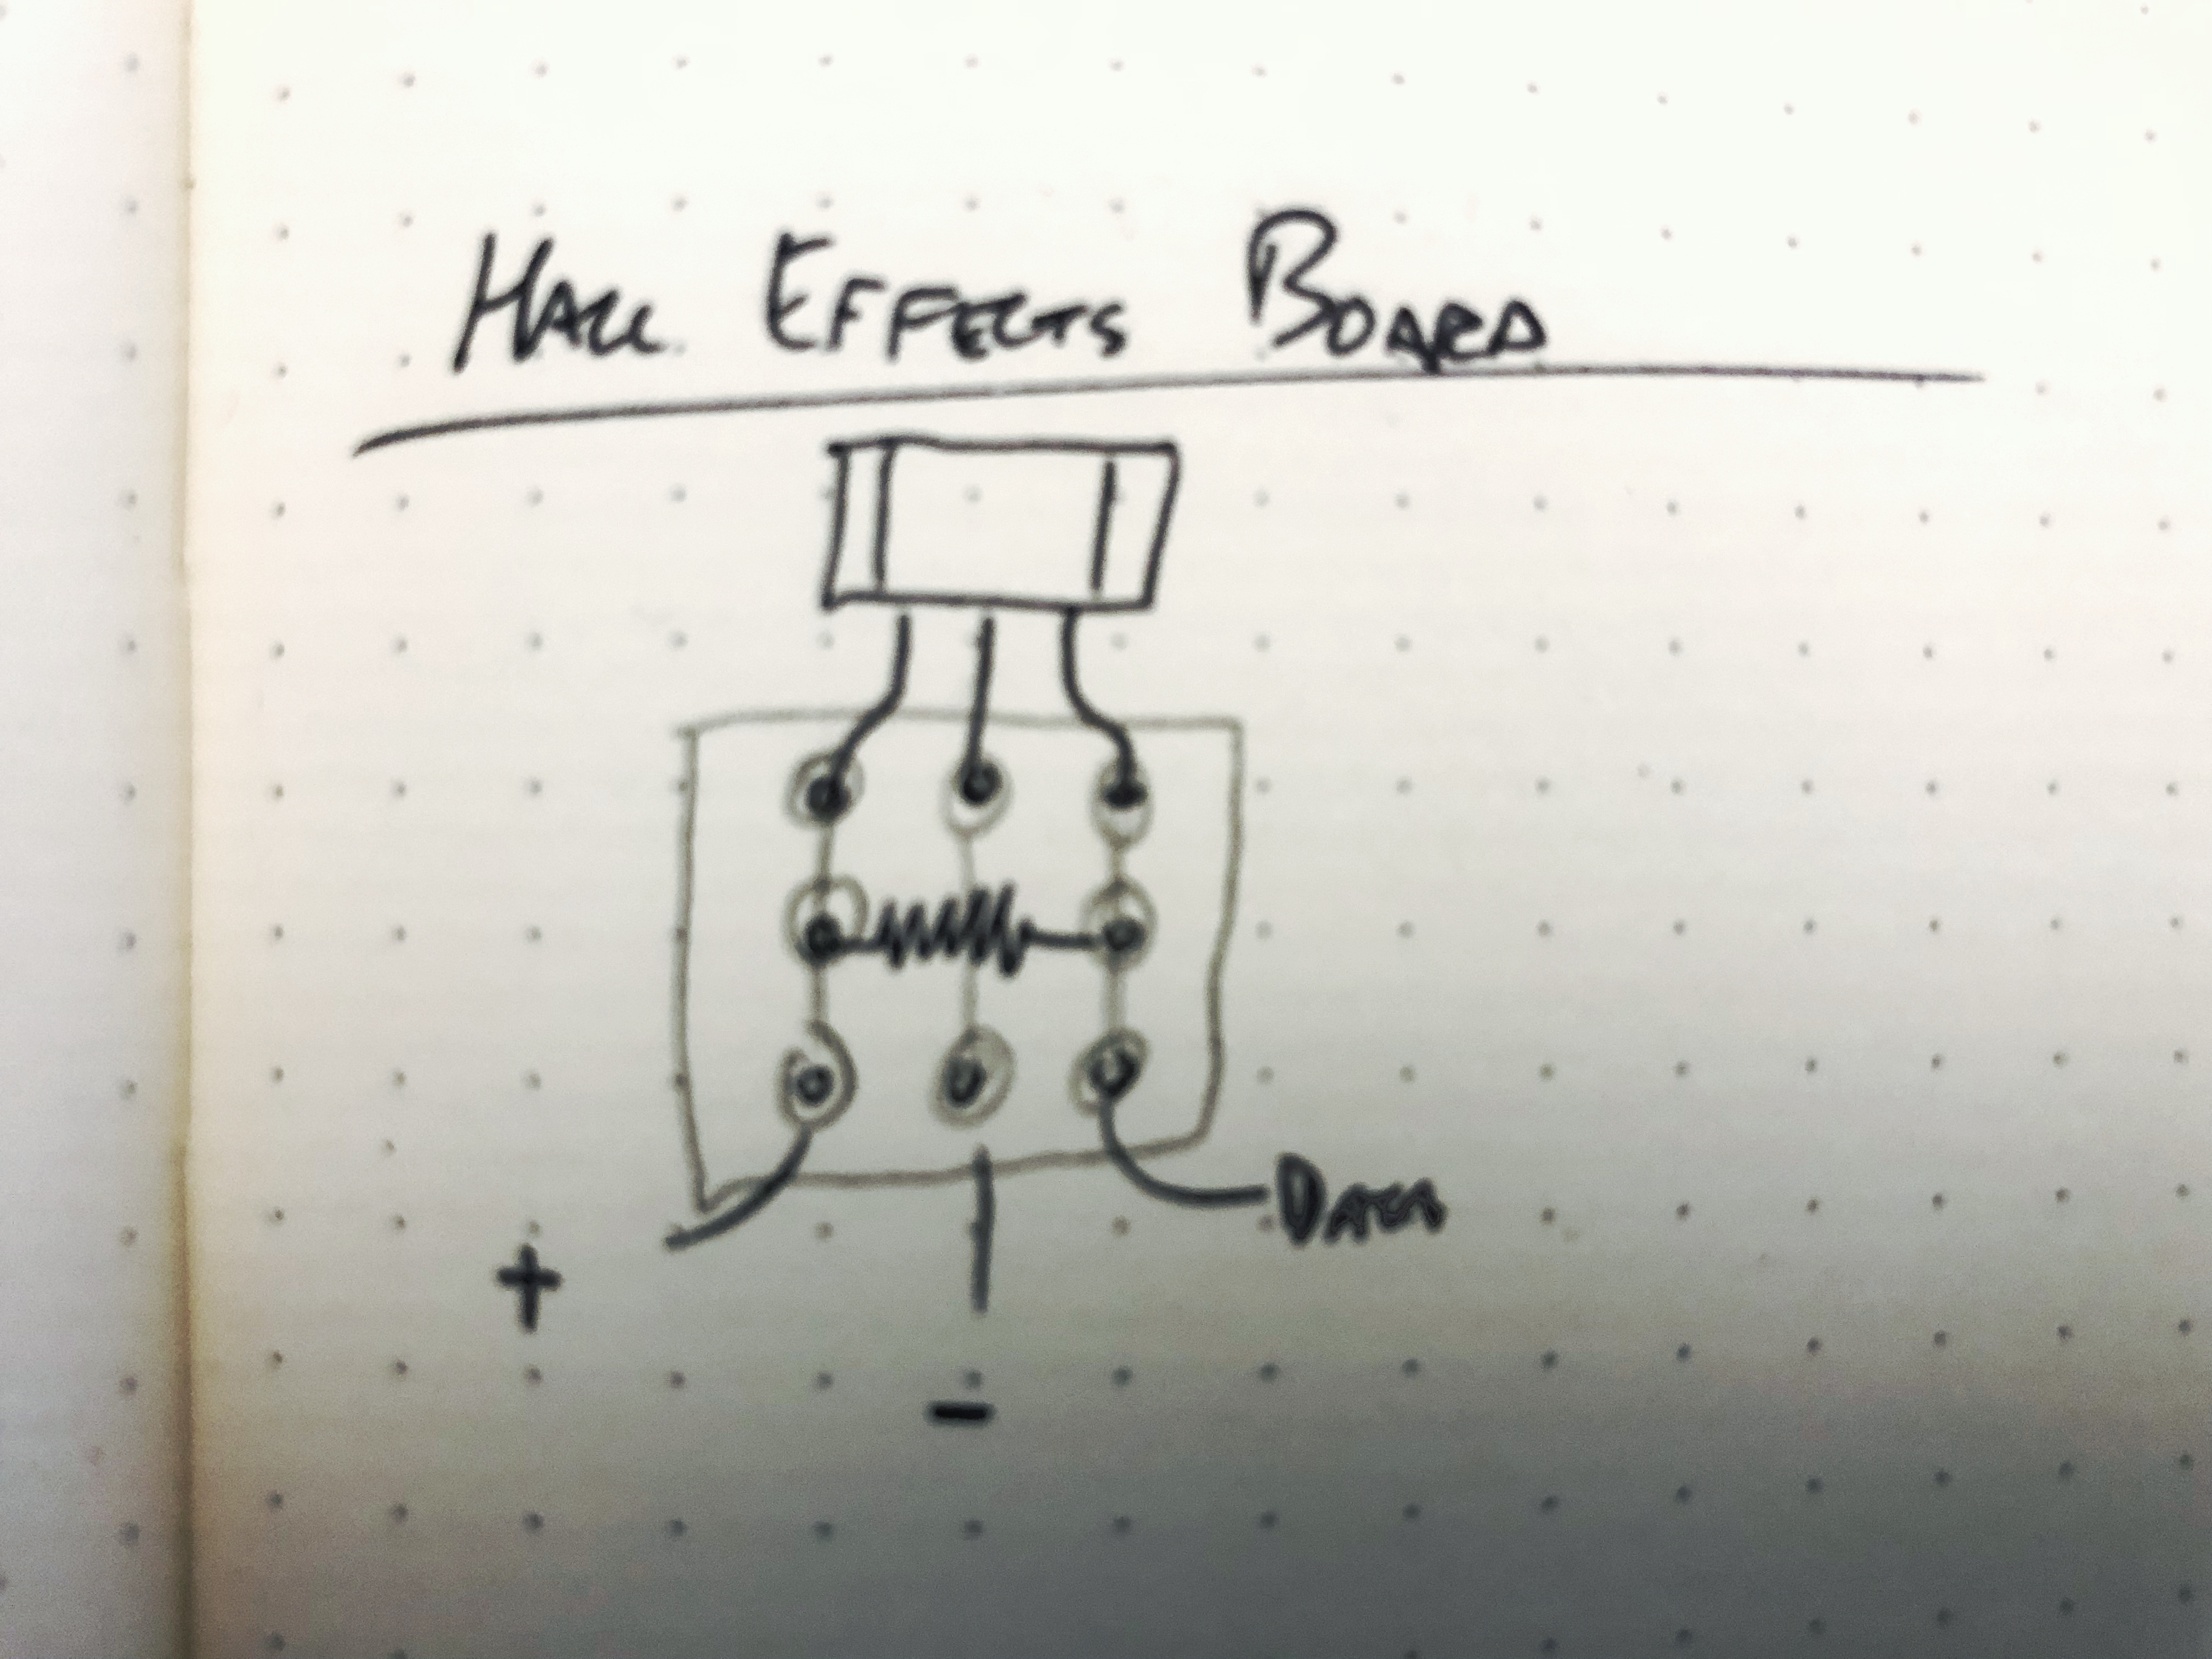 Hall Effects Transistor Board